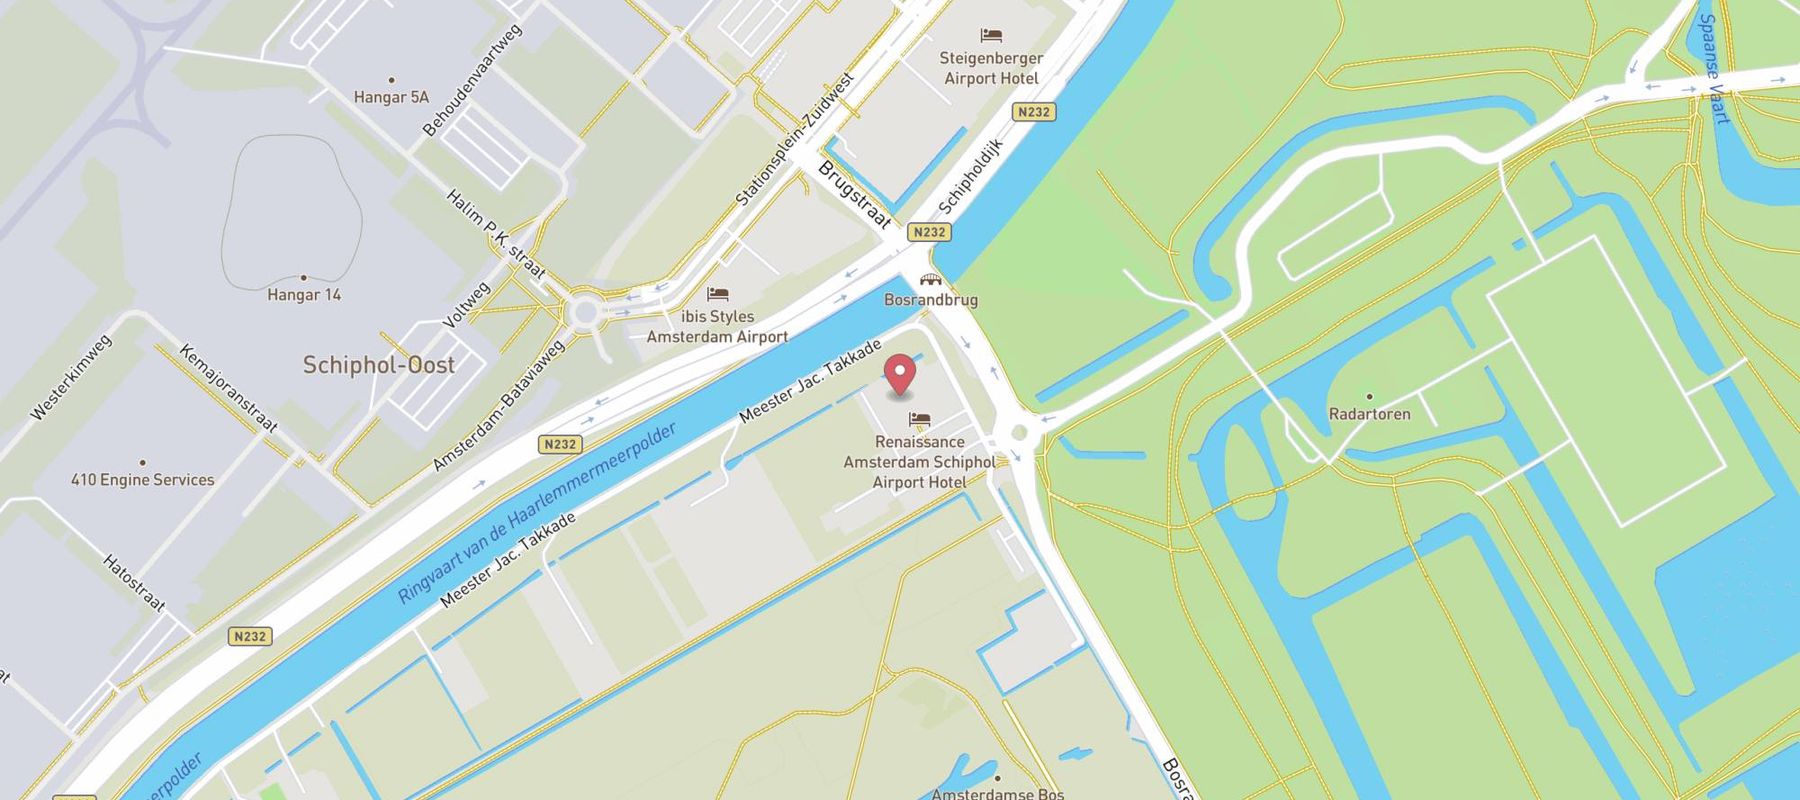 Renaissance Amsterdam Schiphol Airport Hotel map